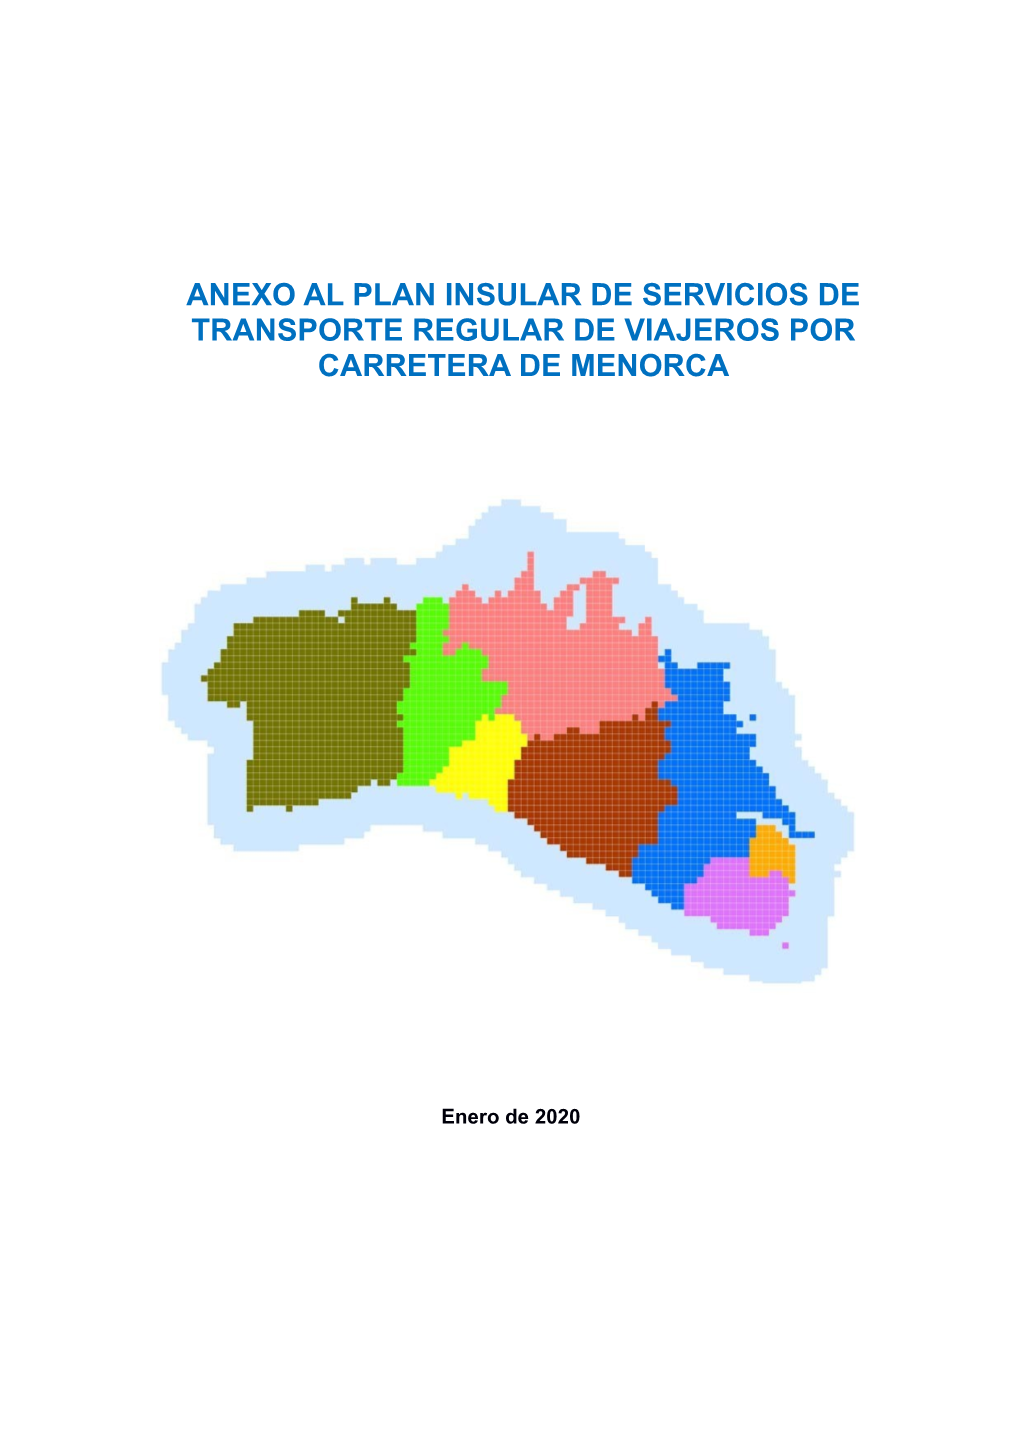 Anexo Al Plan Insular De Servicios De Transporte Regular De Viajeros Por Carretera De Menorca